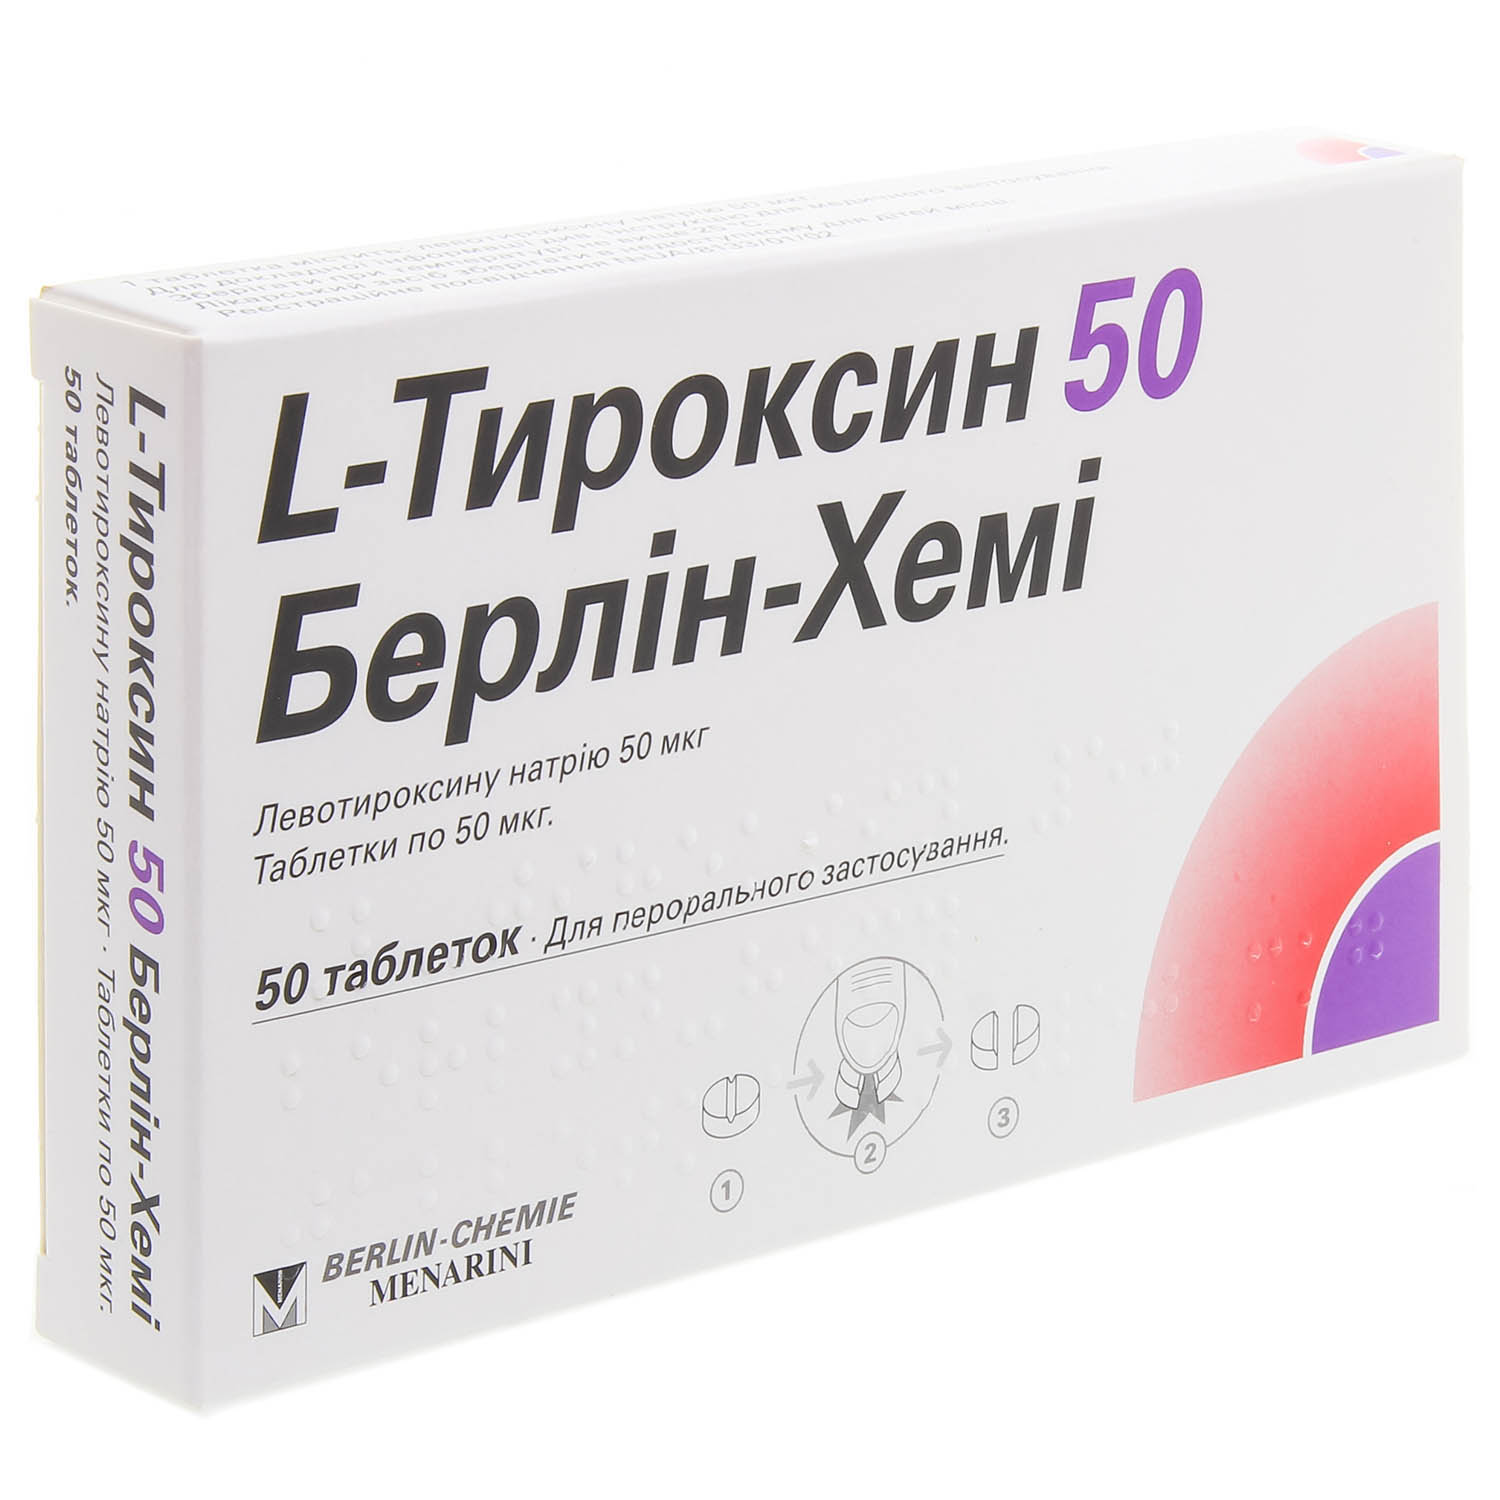 L-ТИРОКСИН 50 БЕРЛИН-ХЕМИ инструкция, аналоги, цена в аптеках .